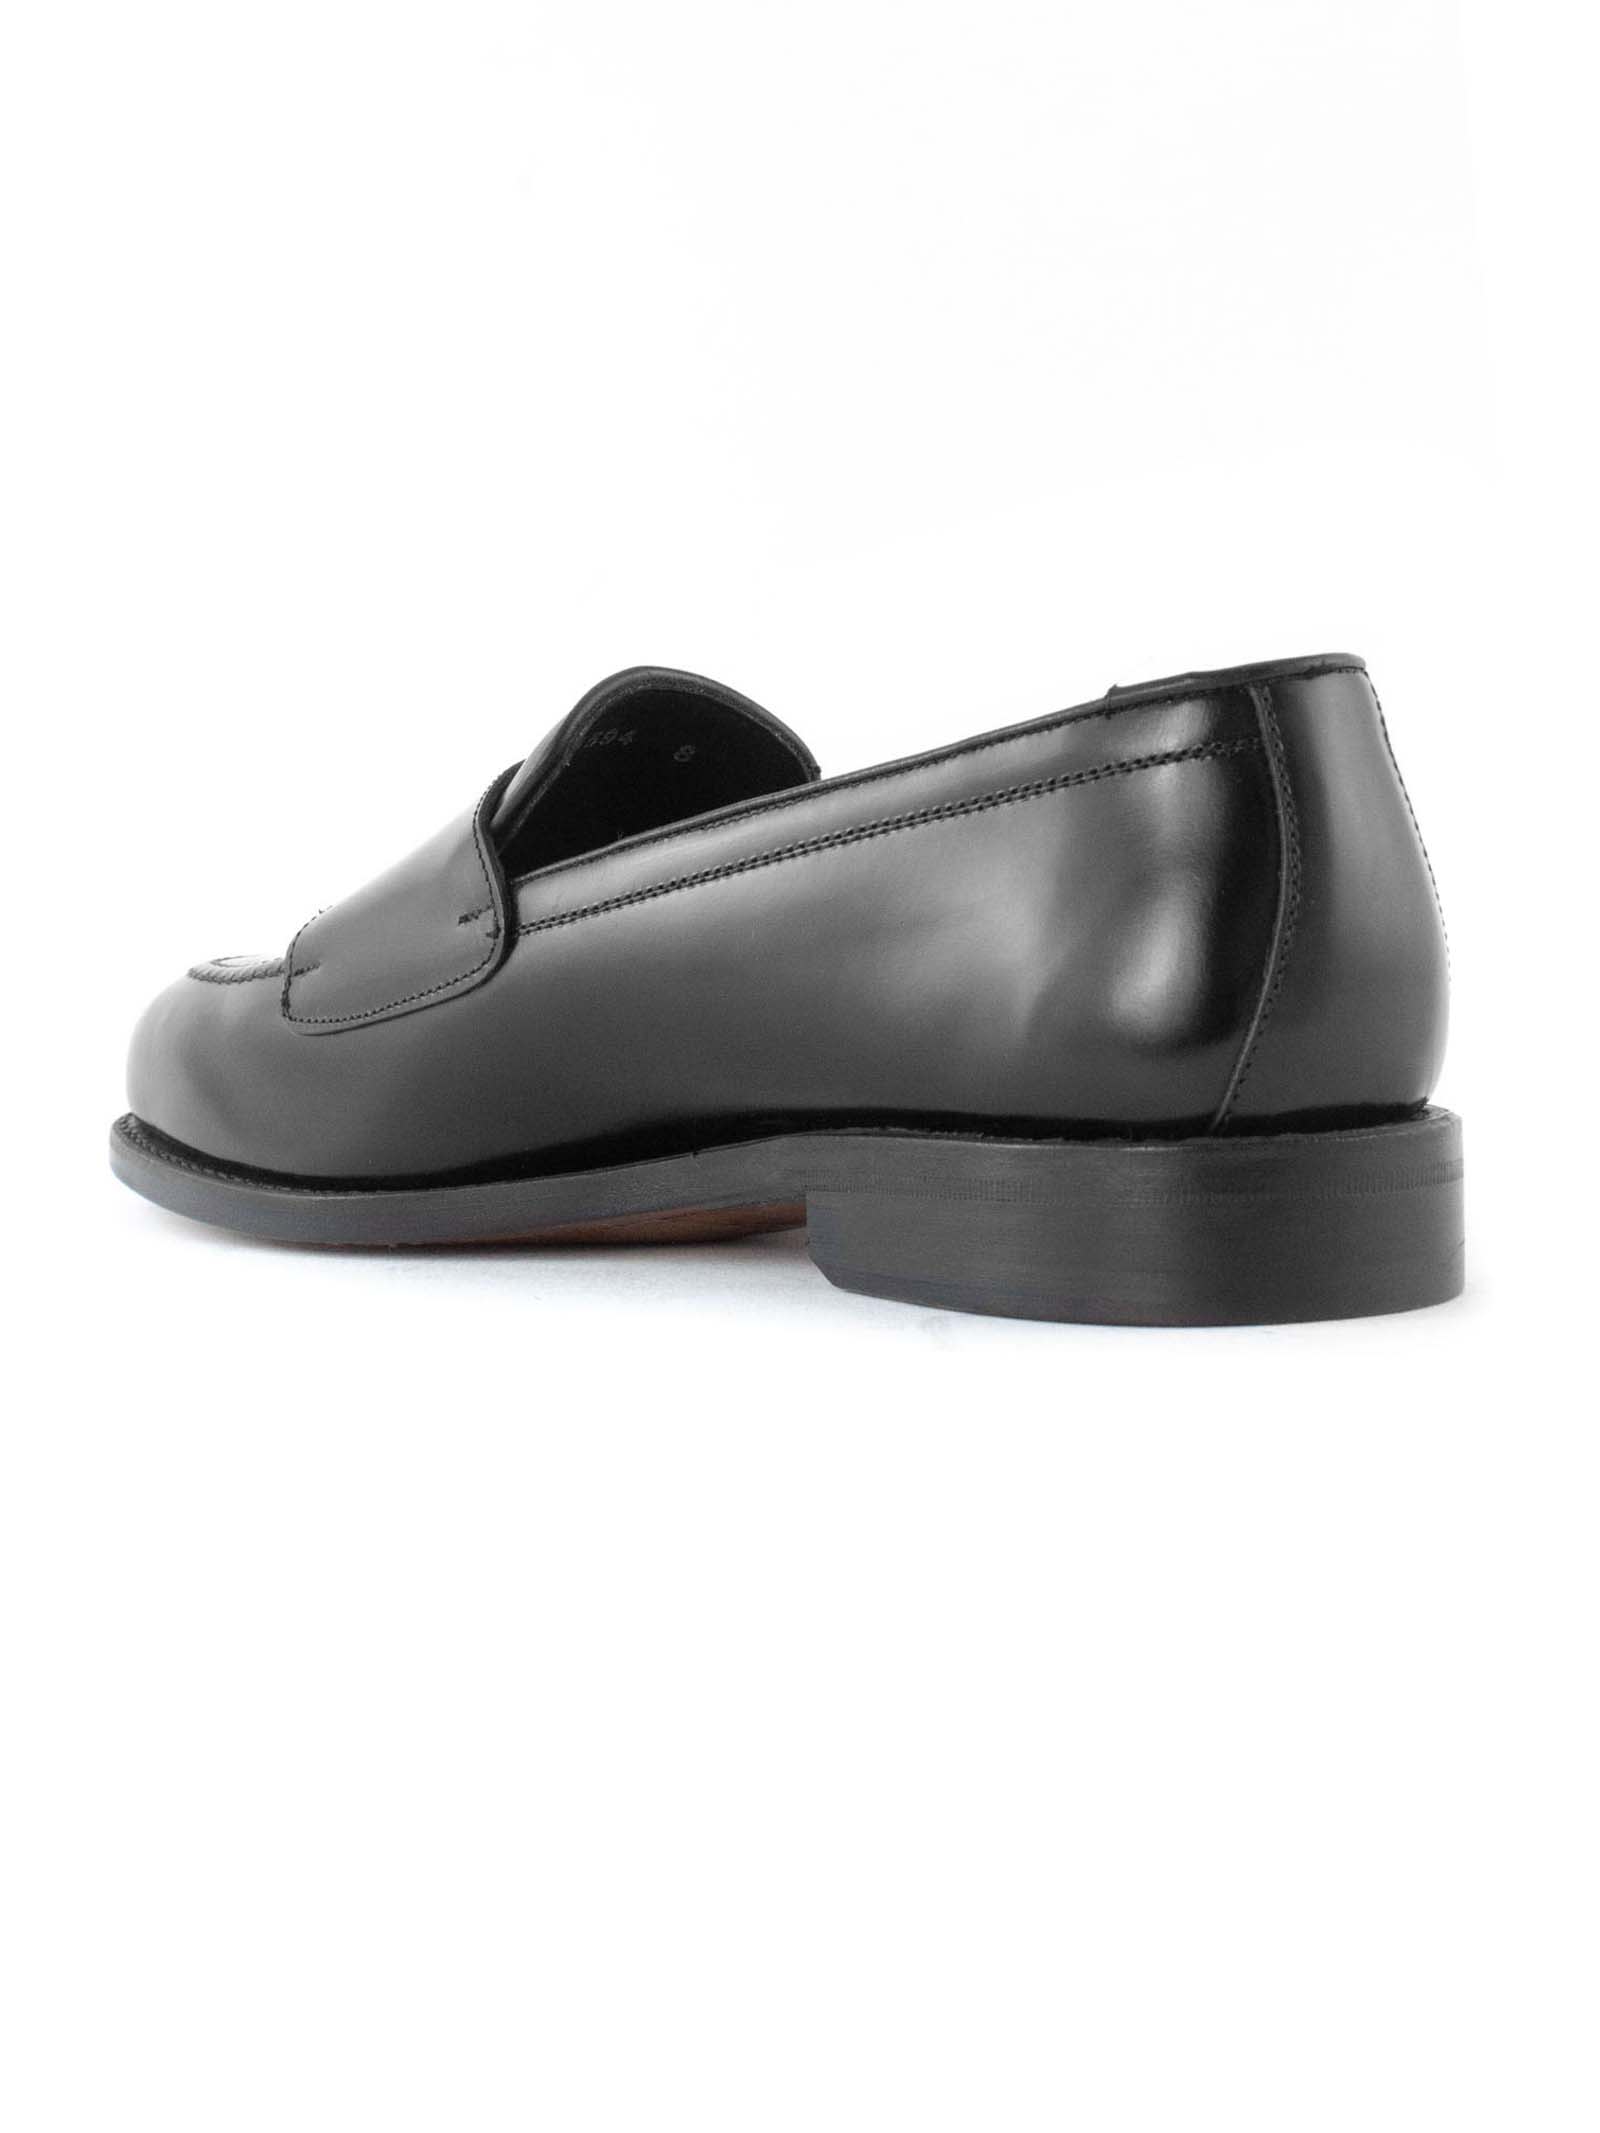 Shop Berwick 1707 Black Calf Leather Monk Shoes